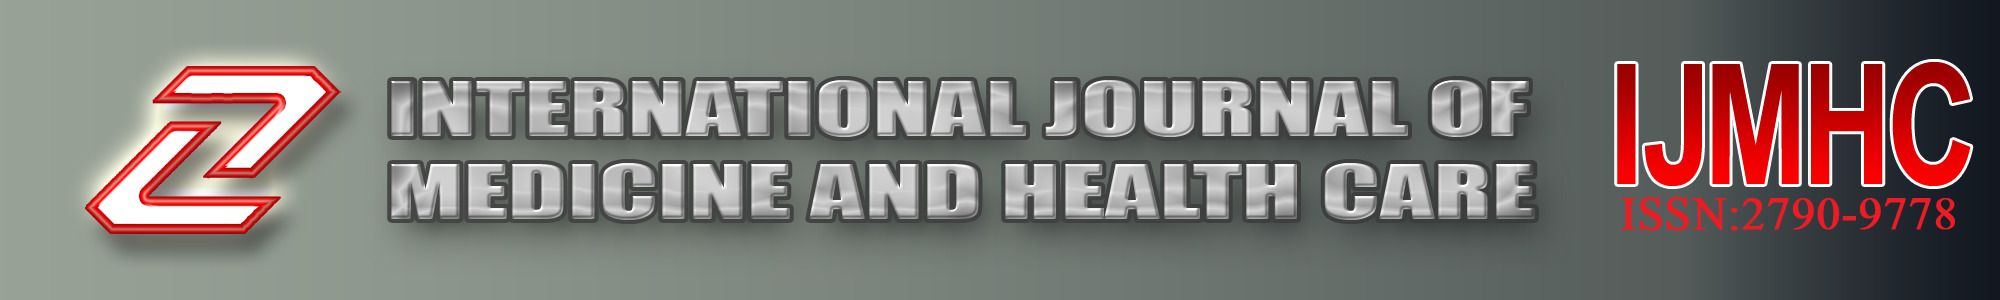 IJMHC_logo